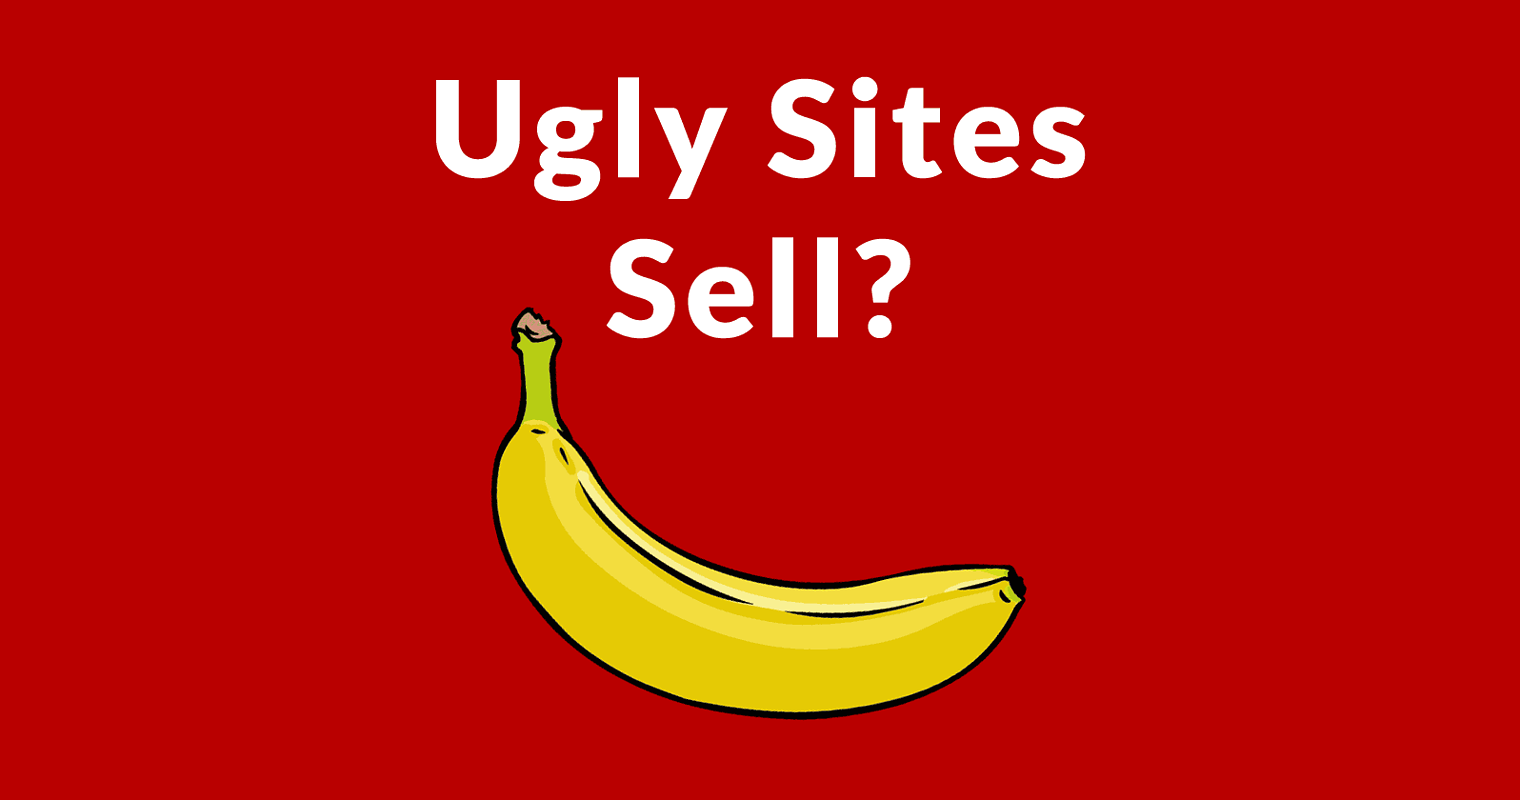 Do Ugly Sites Convert Better?